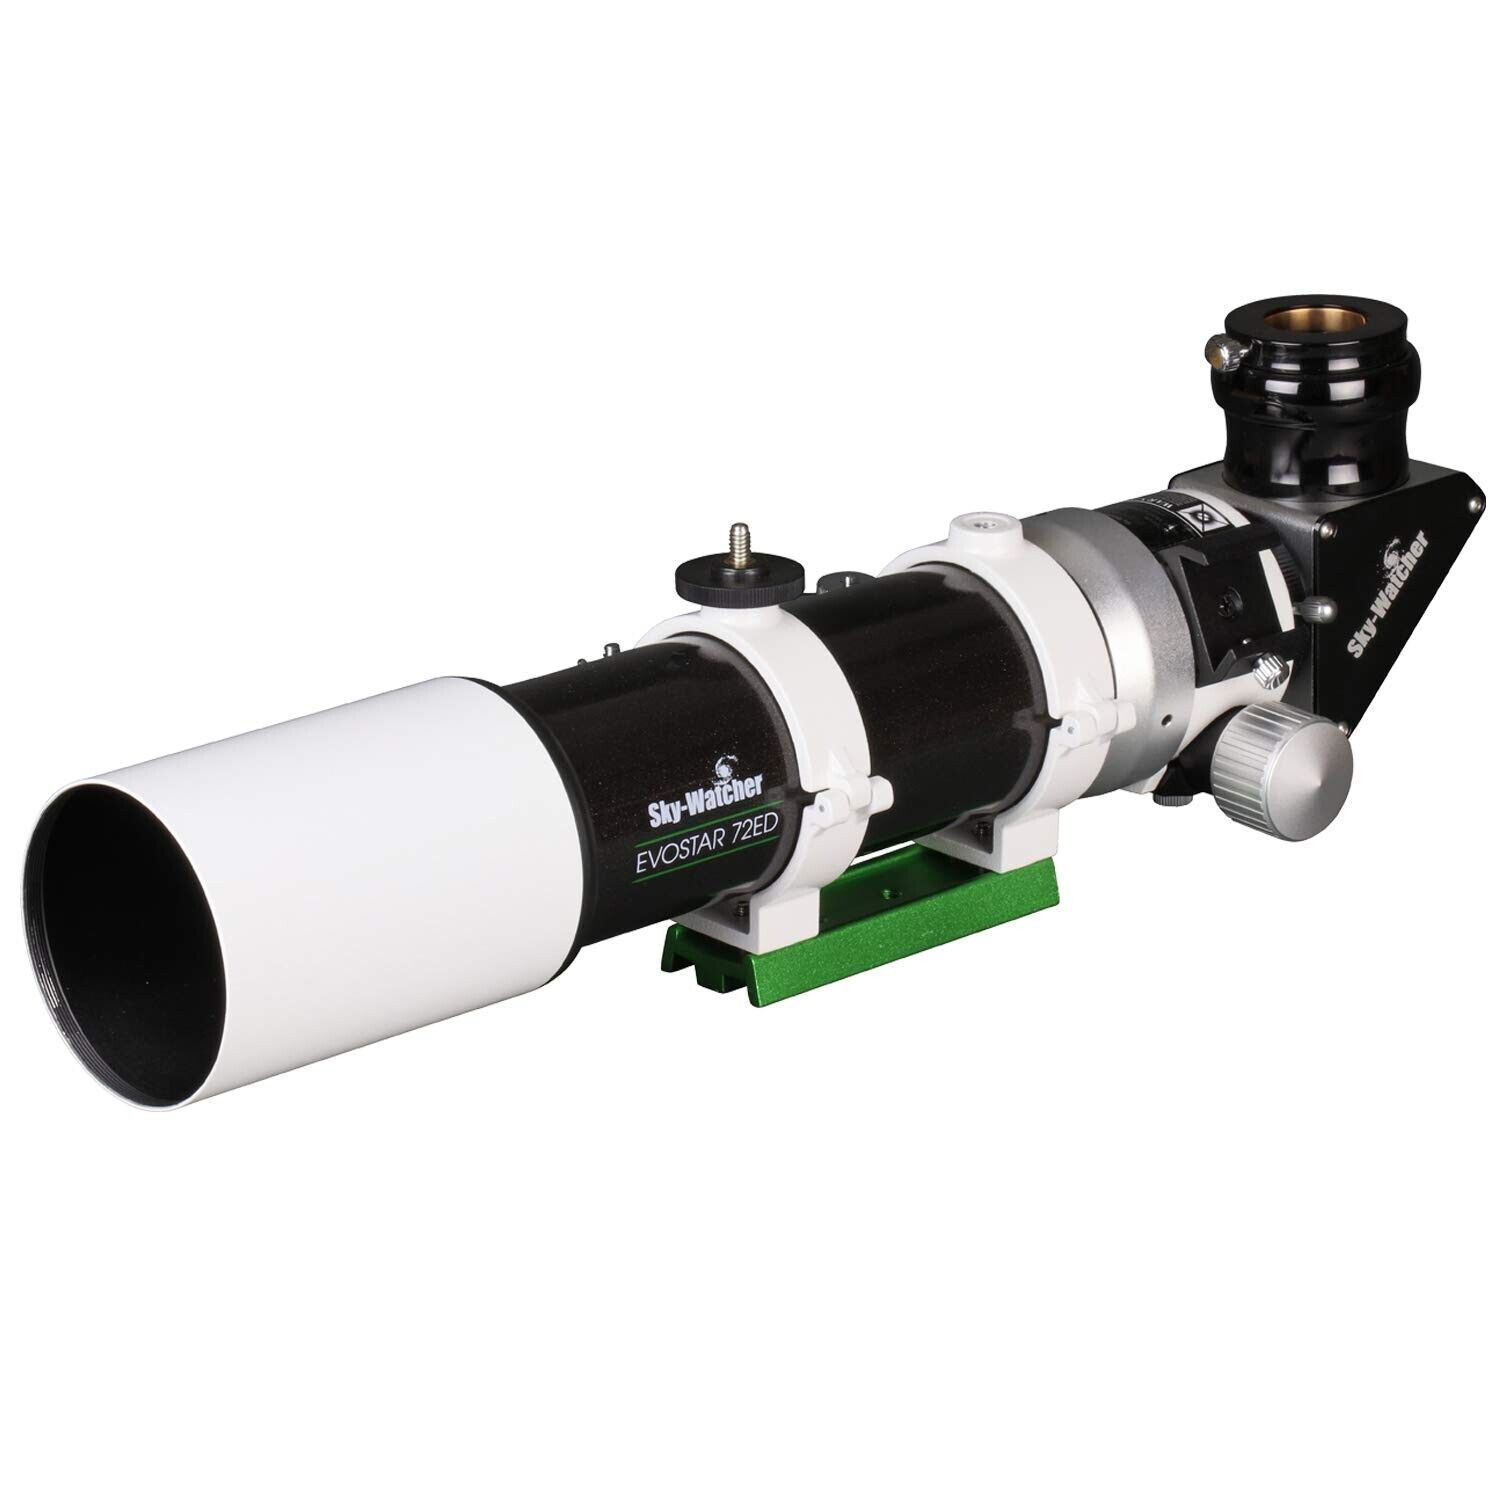 Sky Watcher Sky-Watcher EvoStar 72 APO Doublet Refractor – Compact and Portab...